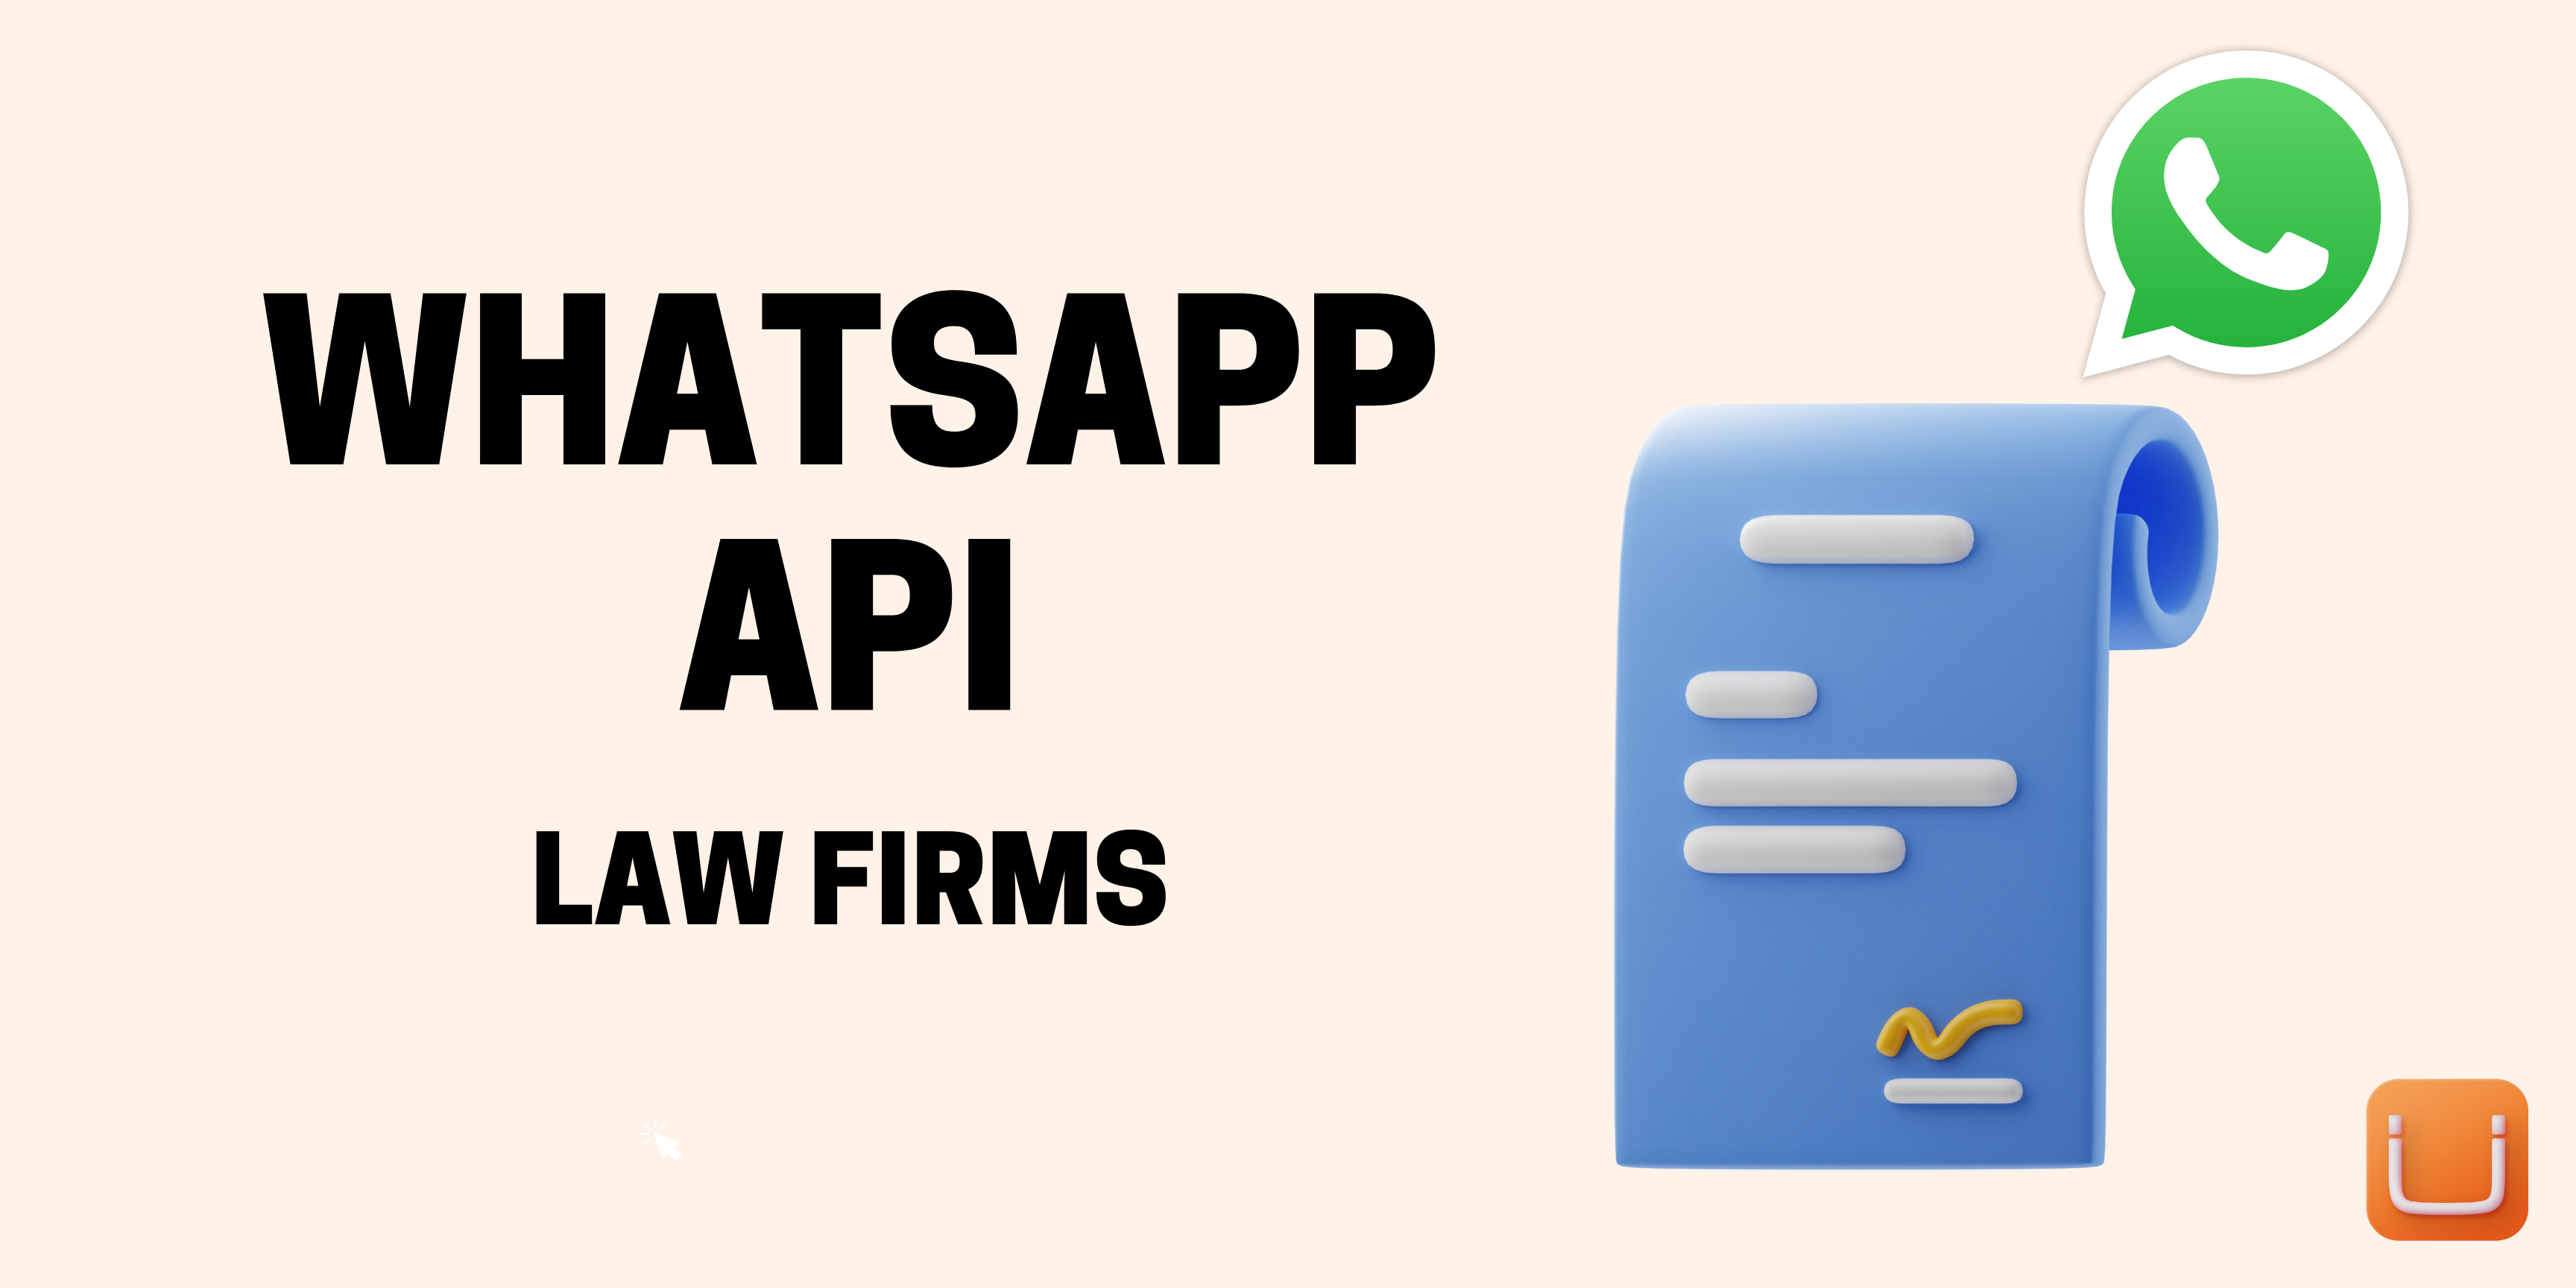 Whatsapp api Law firms